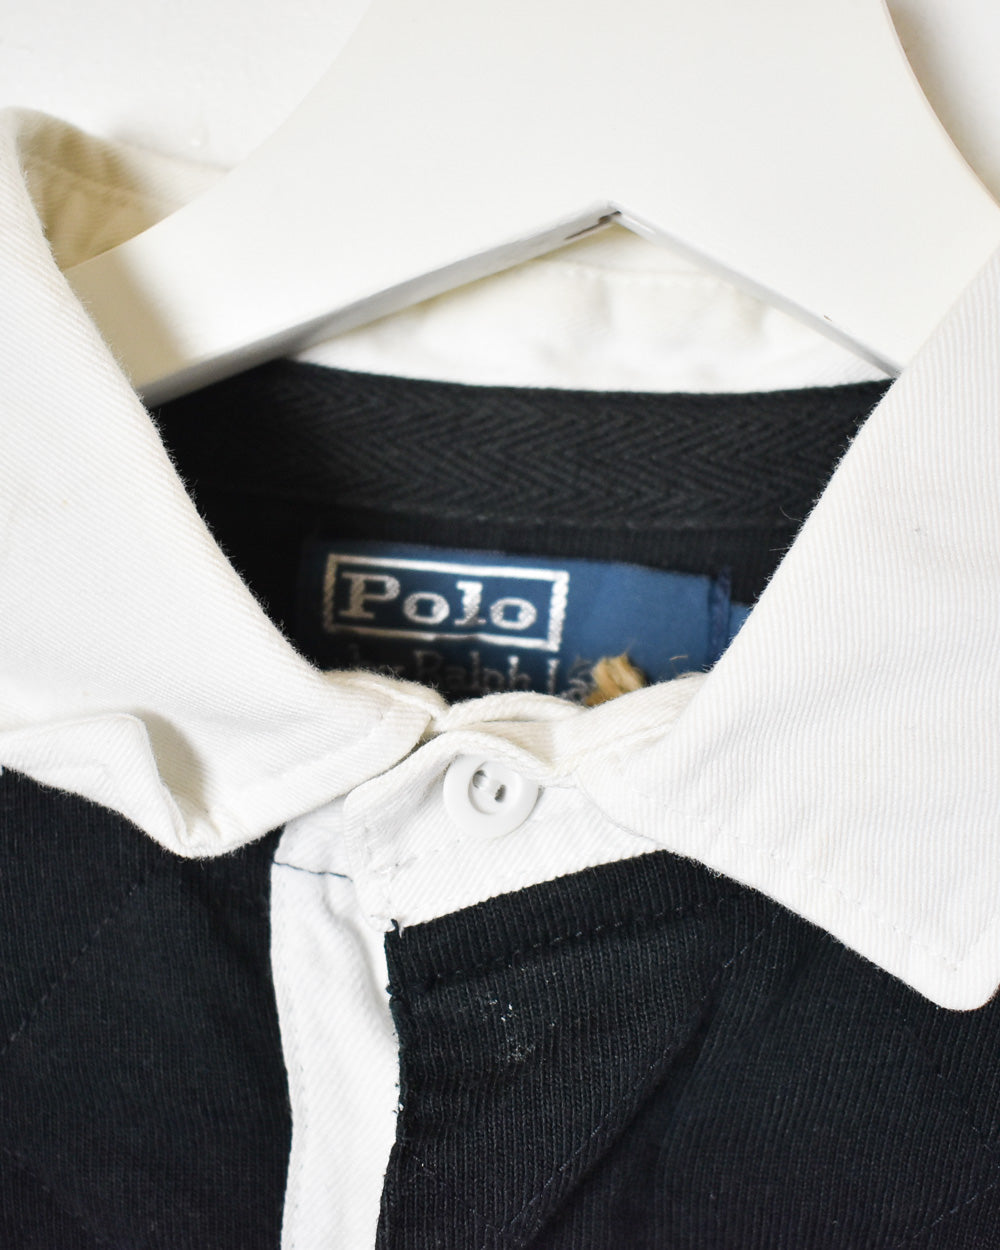 Black Polo Ralph Lauren Black Watch Rugby Shirt - Medium